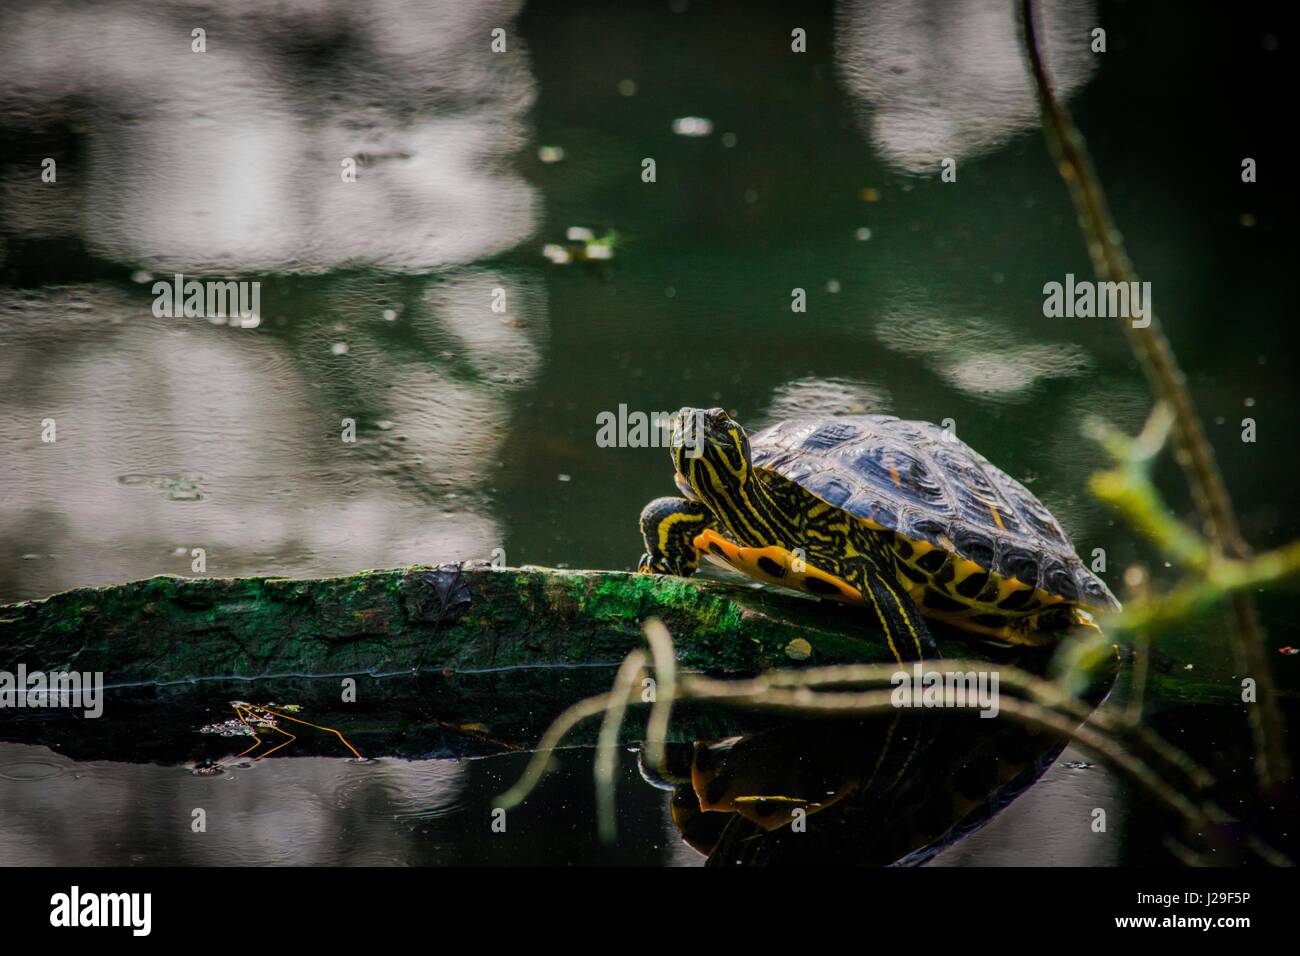 tortue nature lac eau lisse rocher branche turtle on a branch lake wild nature skildkröte Skölpadda tartaruga kame zeeschilpad cherepakha Stock Photo